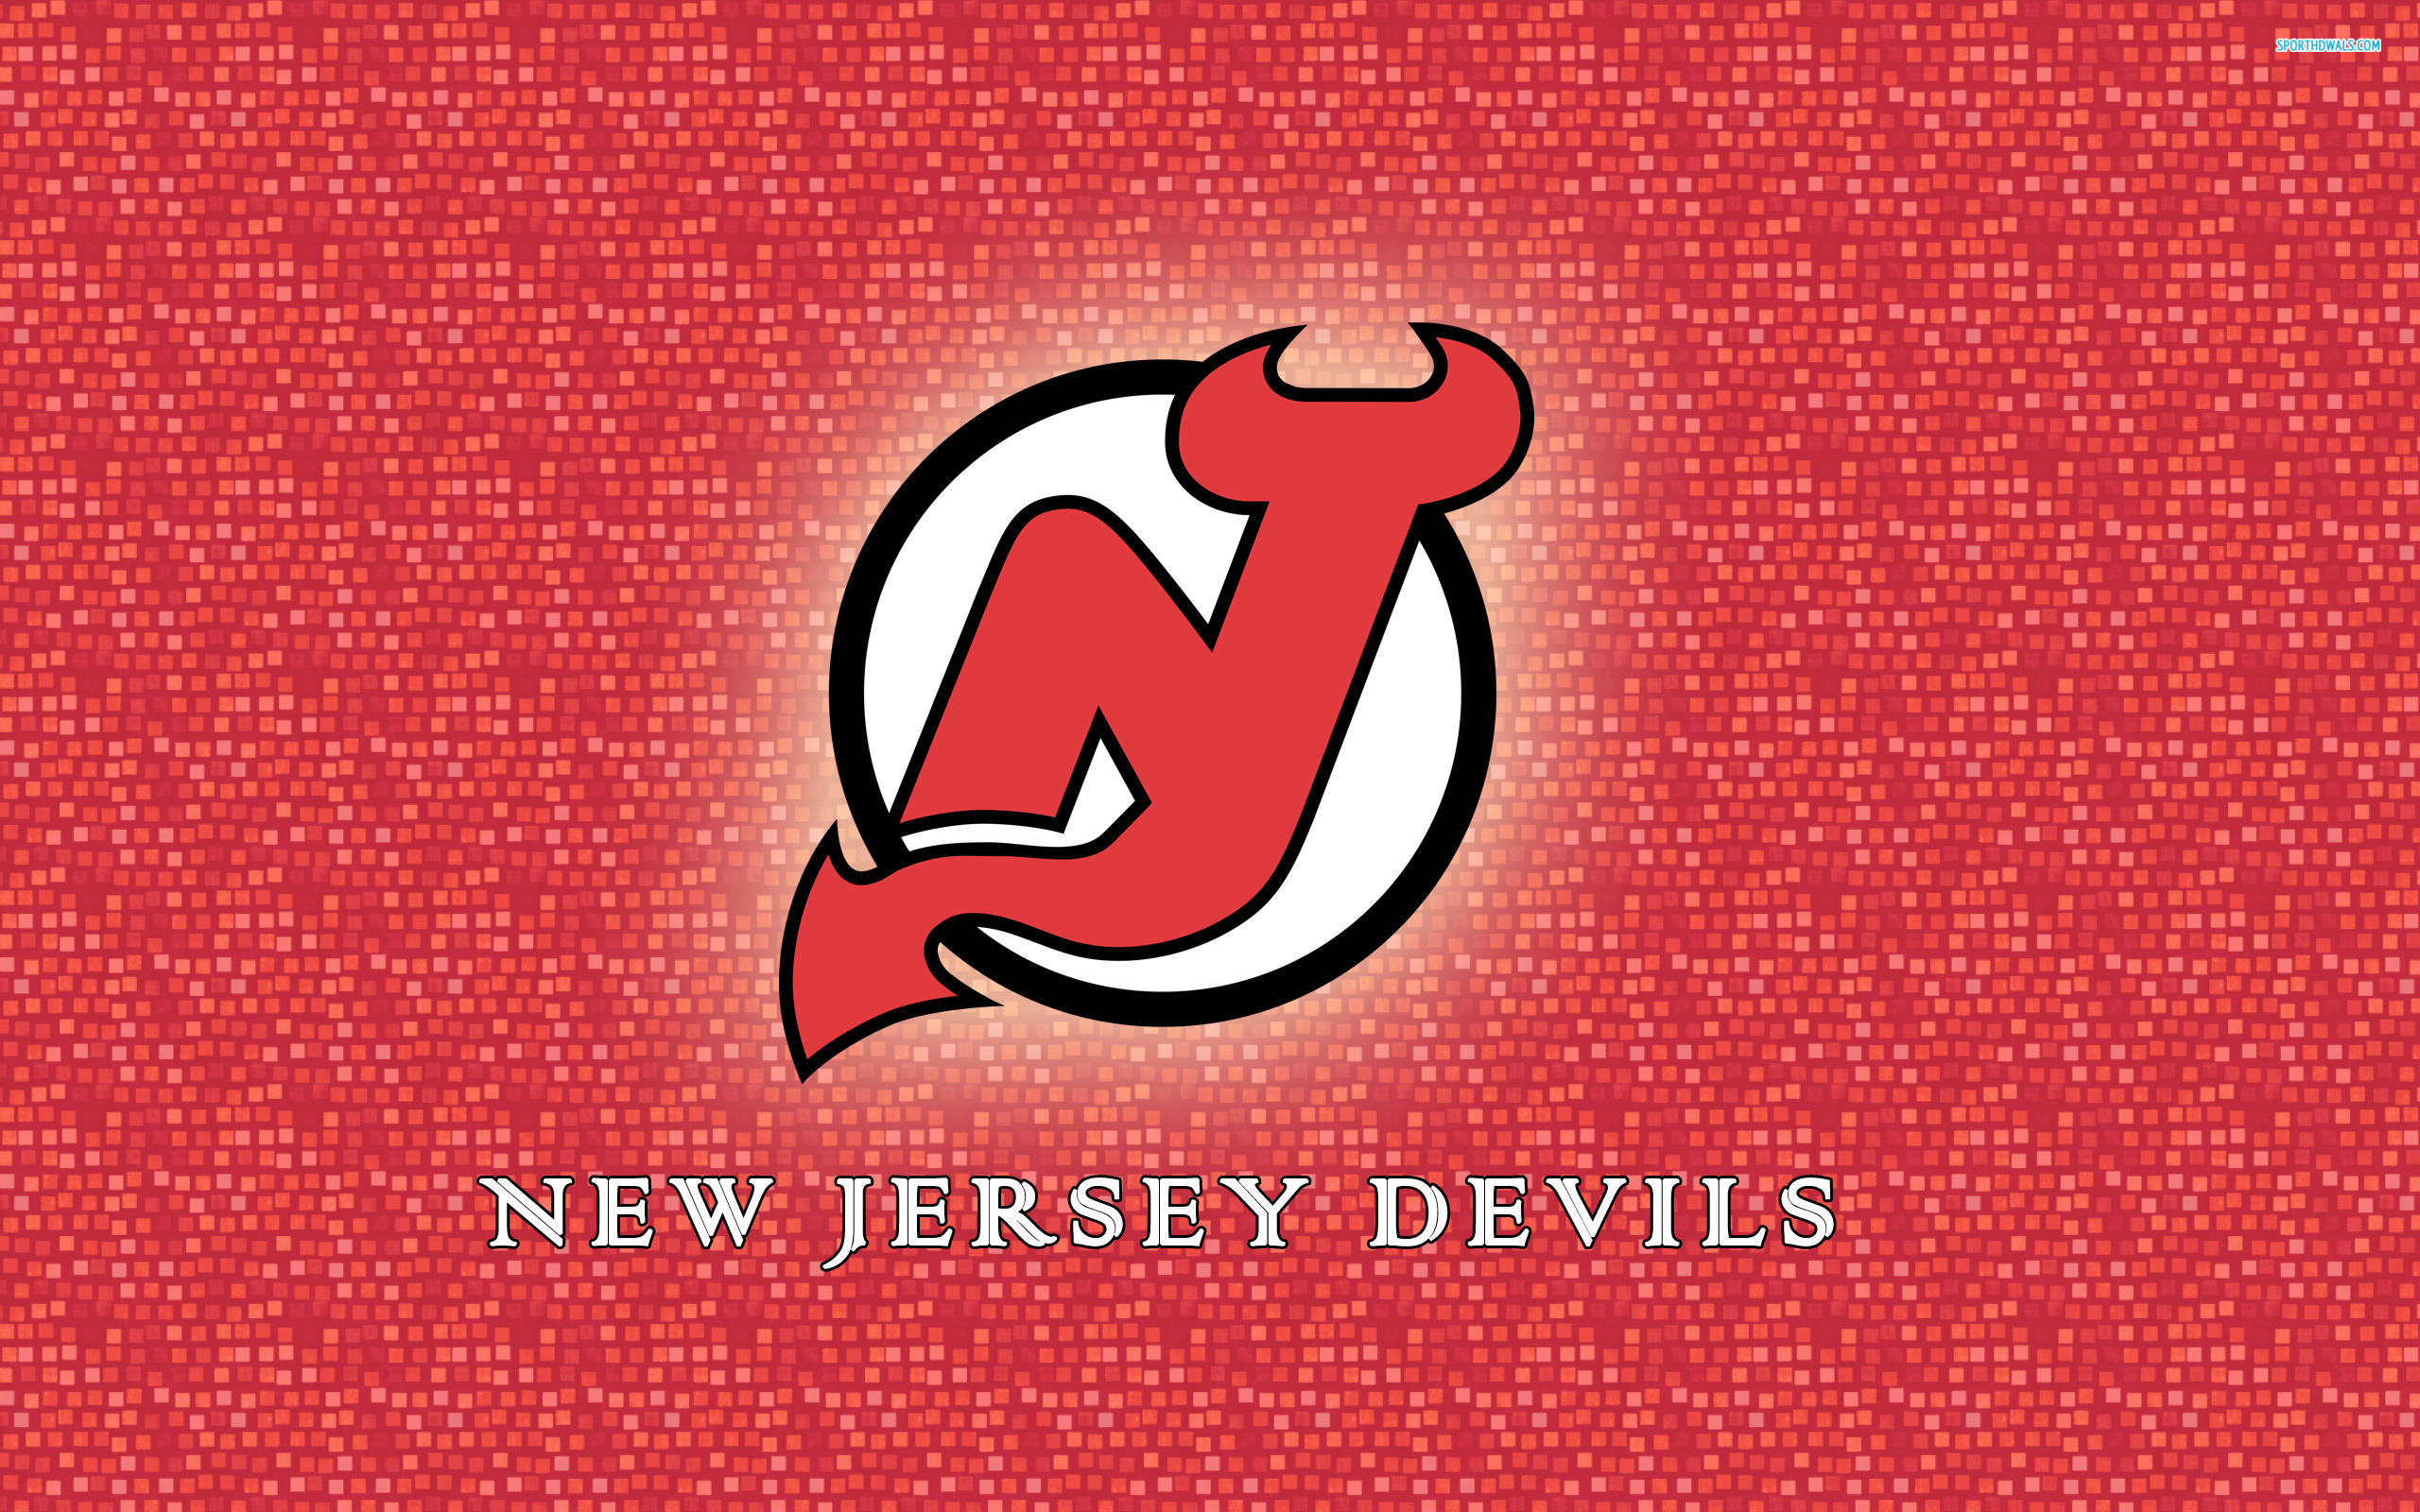 New Jersey Devils HD Wallpaper - WallpaperSafari